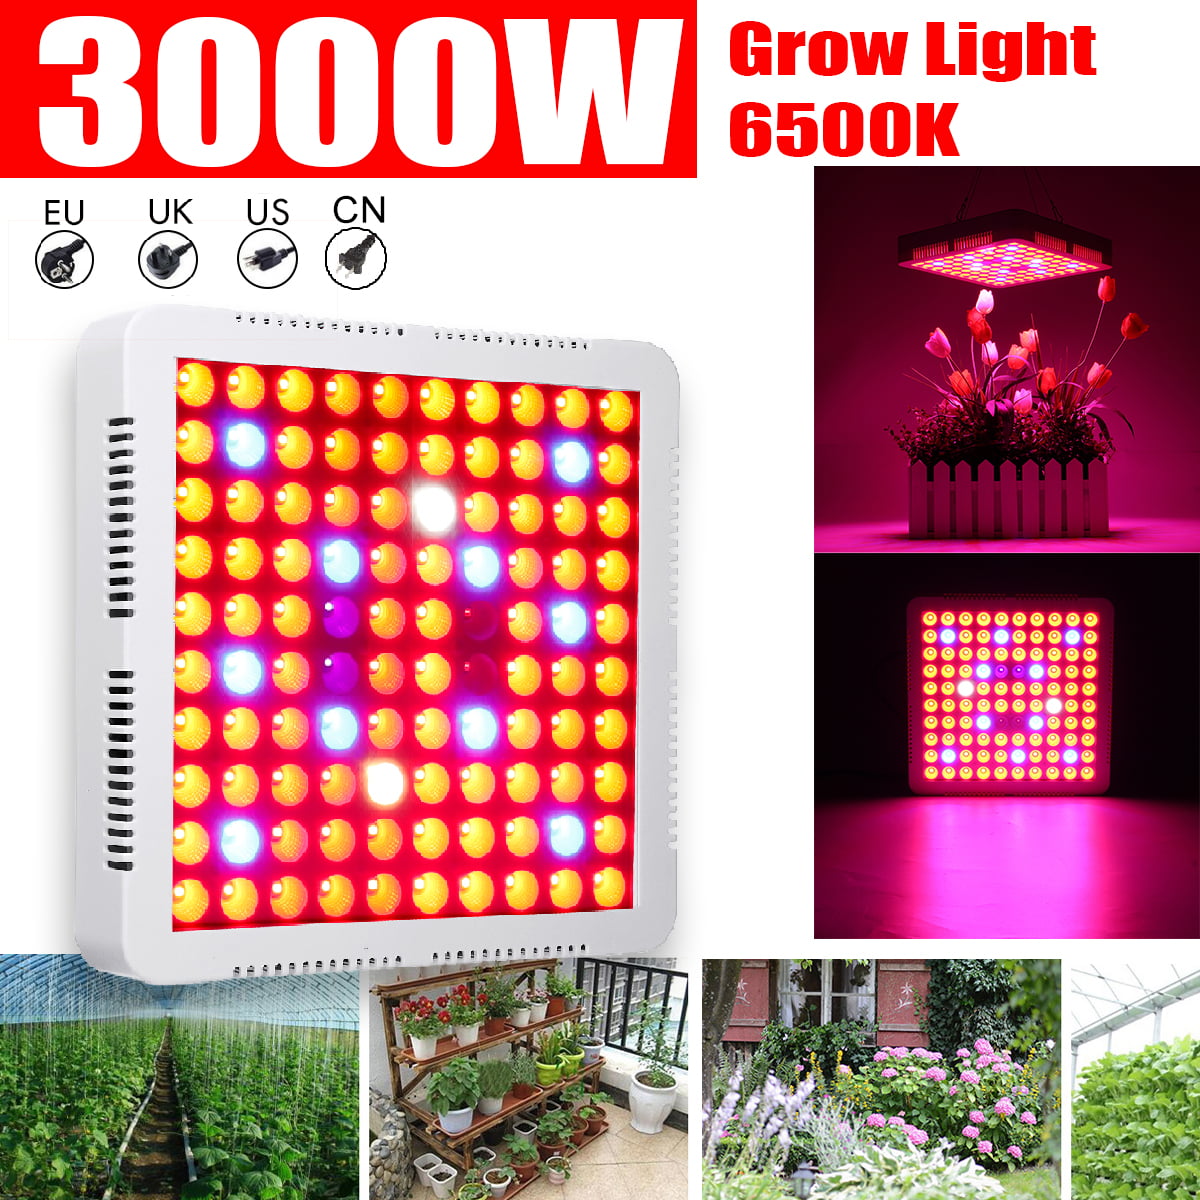 8000W LED Grow Light Lamp Panel Full Spectrum Hydroponic Indoor Veg Plants IR&UV 